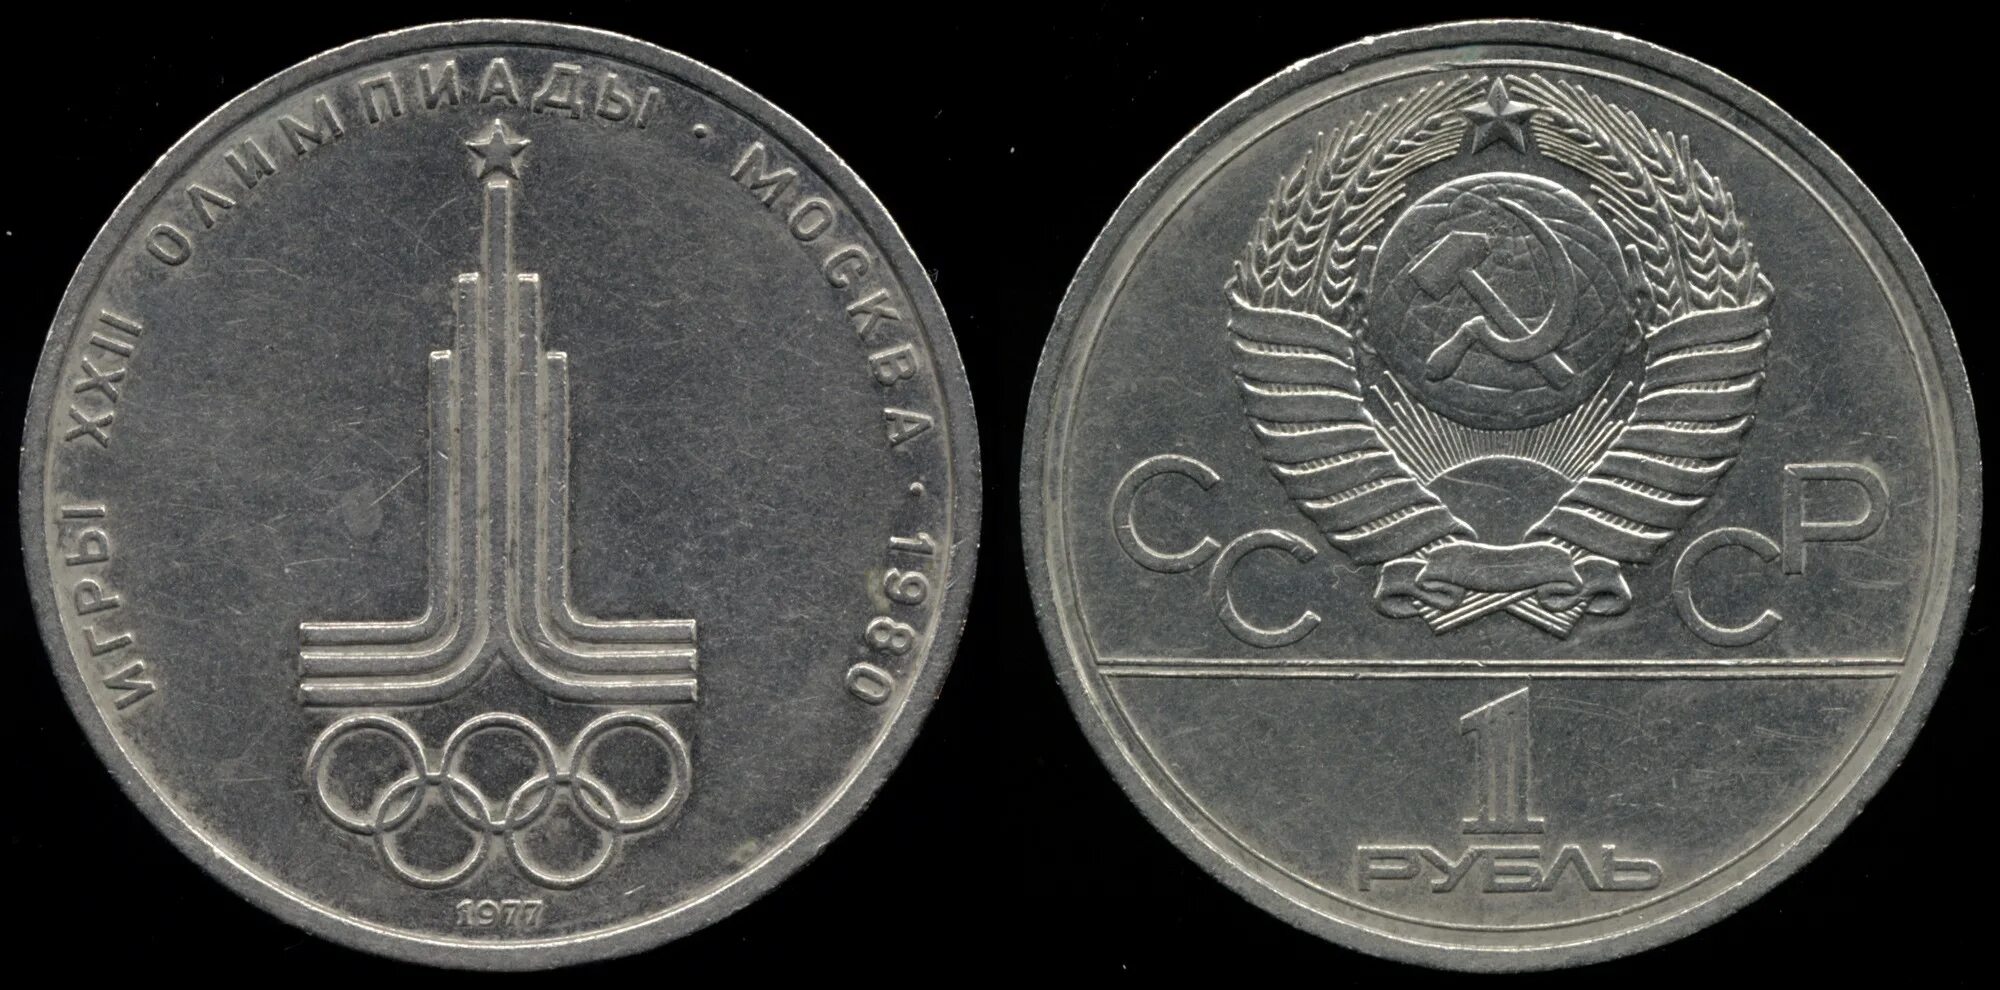 1 рубль в 80 е. Олимпийский рубль СССР 1980. Монета СССР 1 рубль 1980 года Олимпийский. Олимпийский рубль 1977.